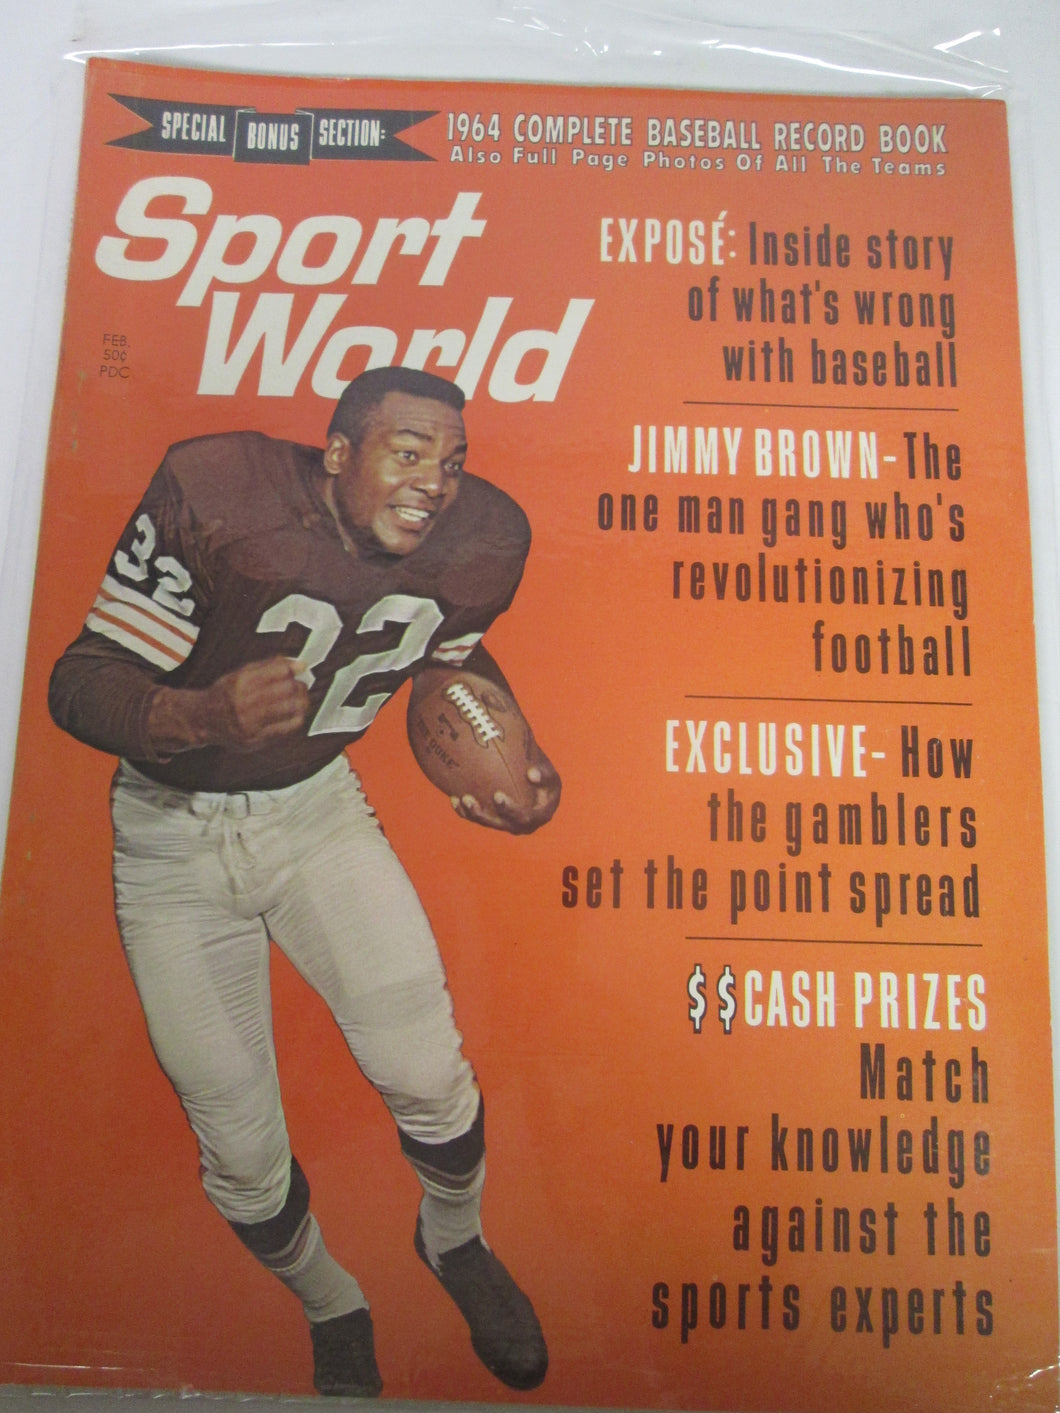 Sport World Magazine 1964 Complete Baseball Record Book Feb 1964